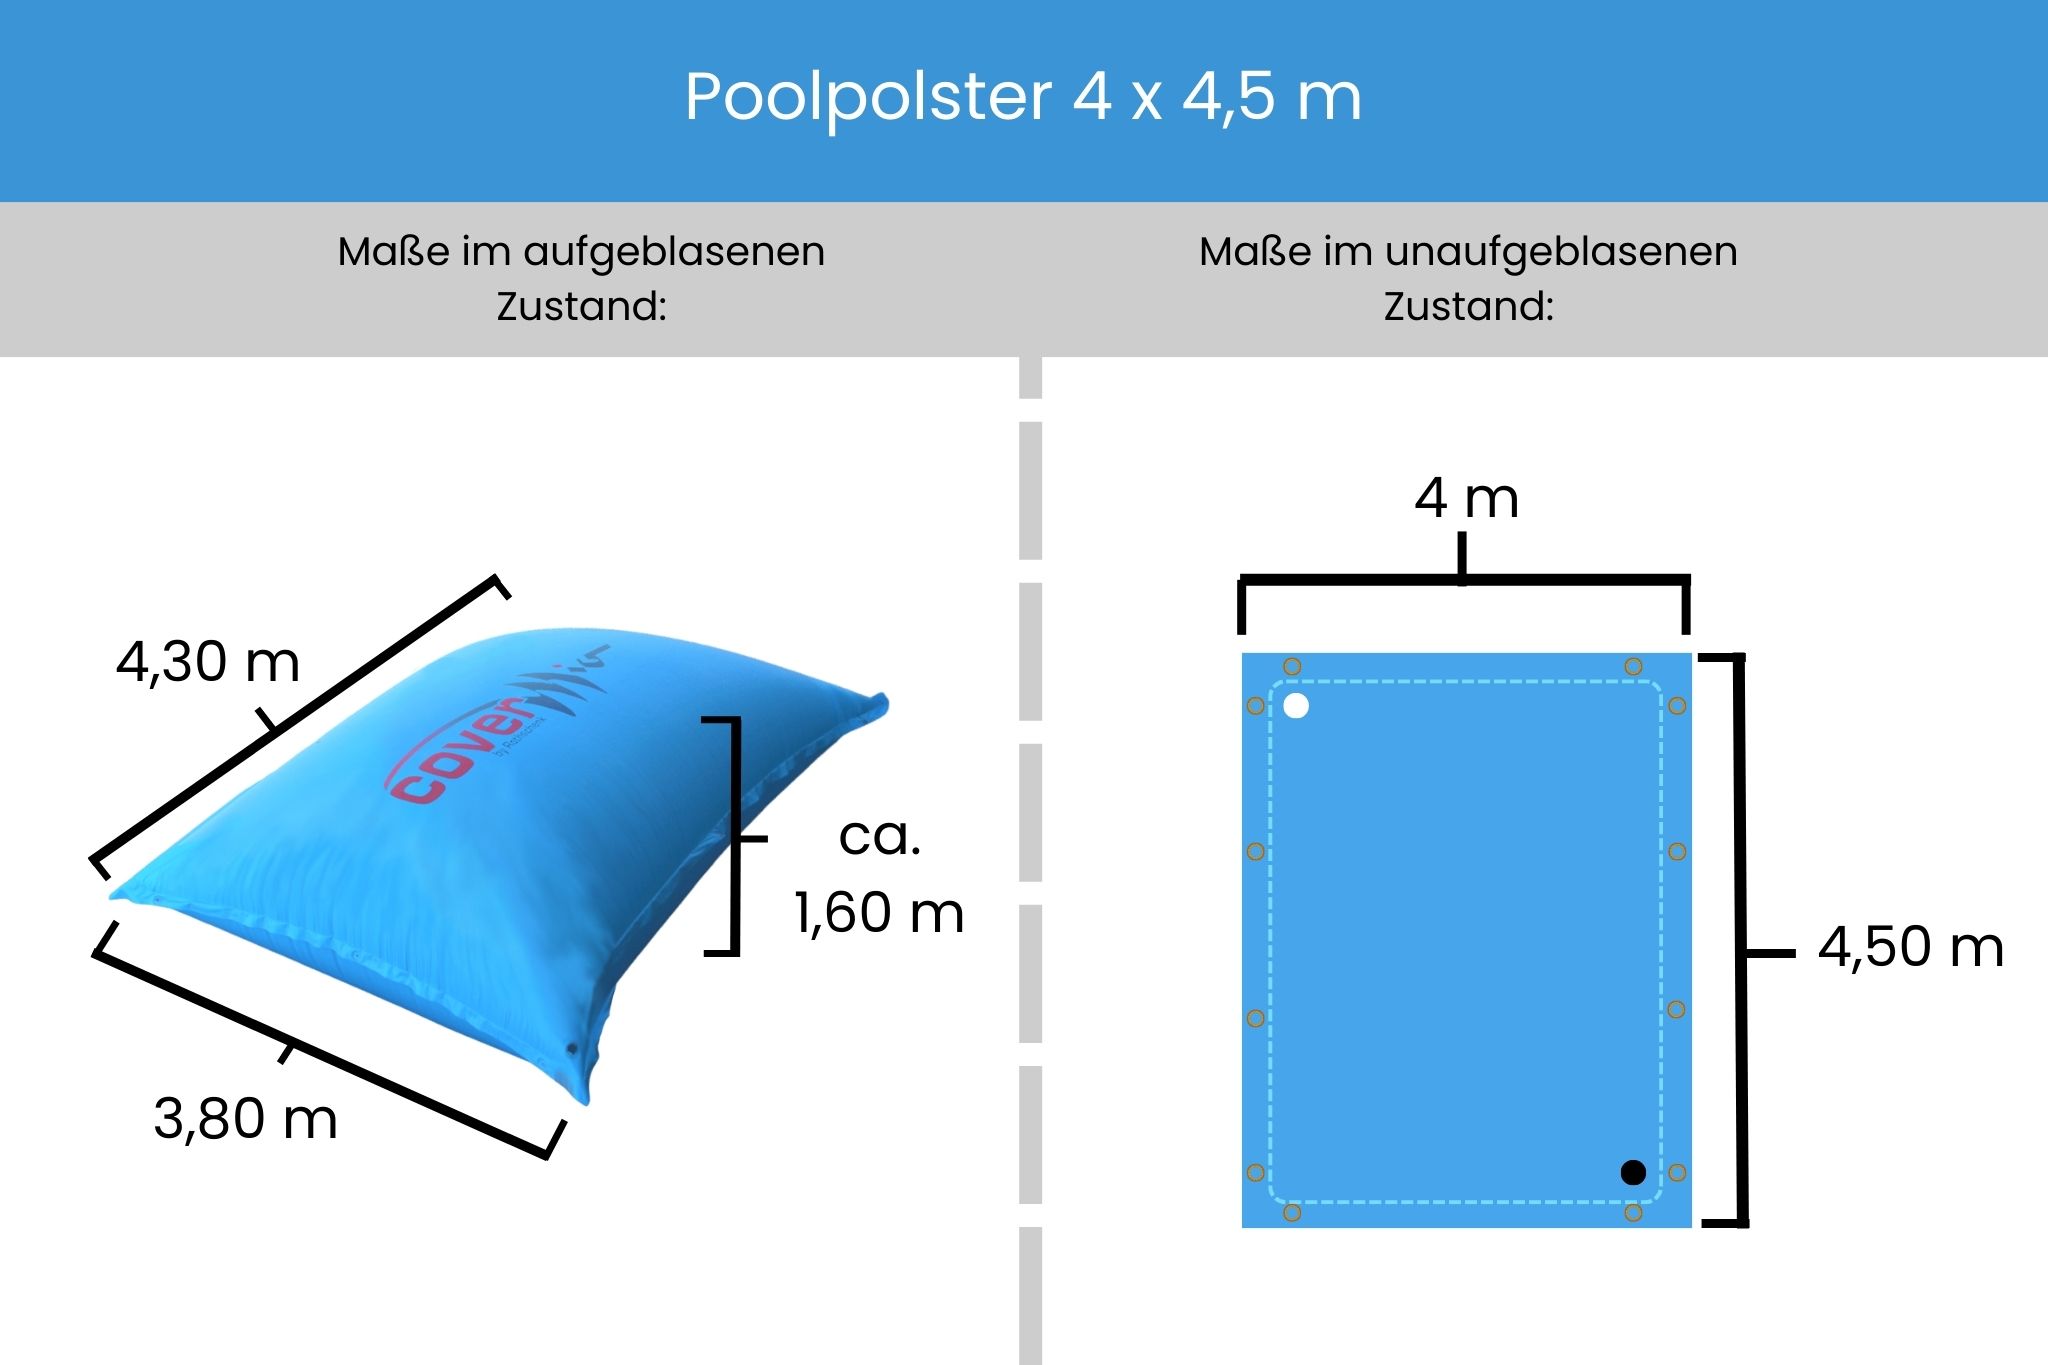 Poolpolster 4 x 4,5 m